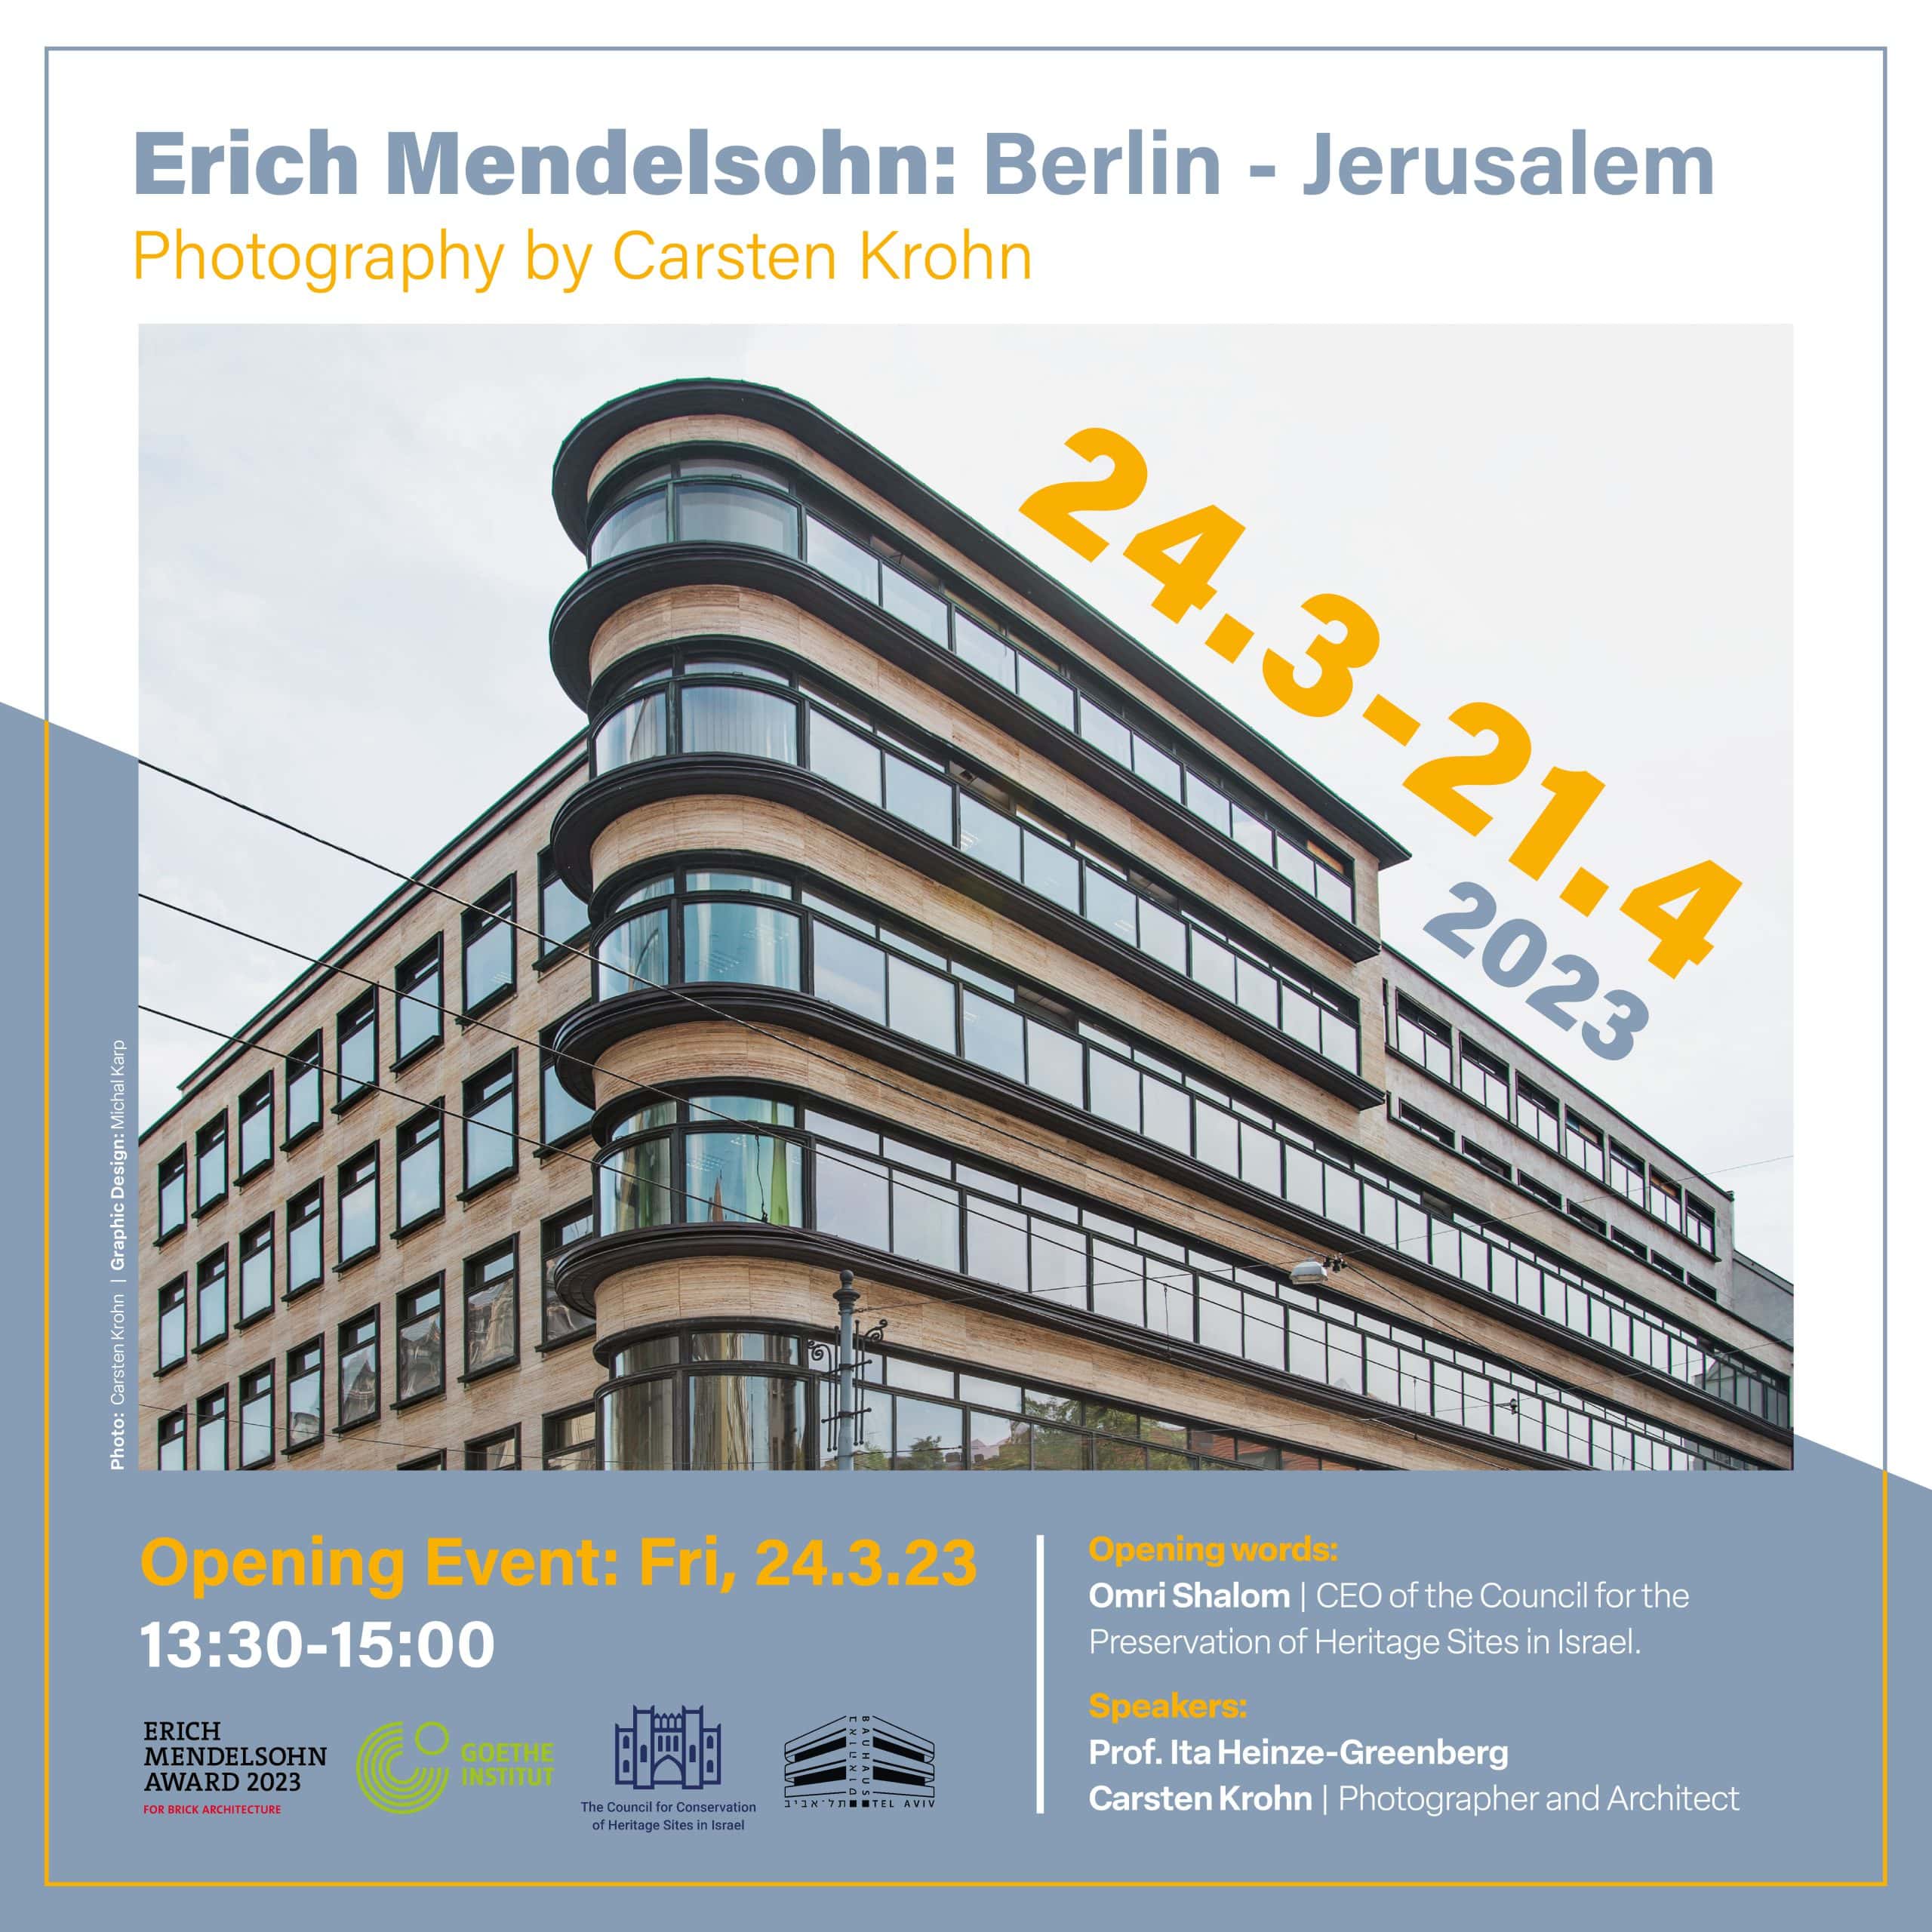 “Erich Mendelsohn: Berlin – Jerusalem” Photography by Carsten Krohn